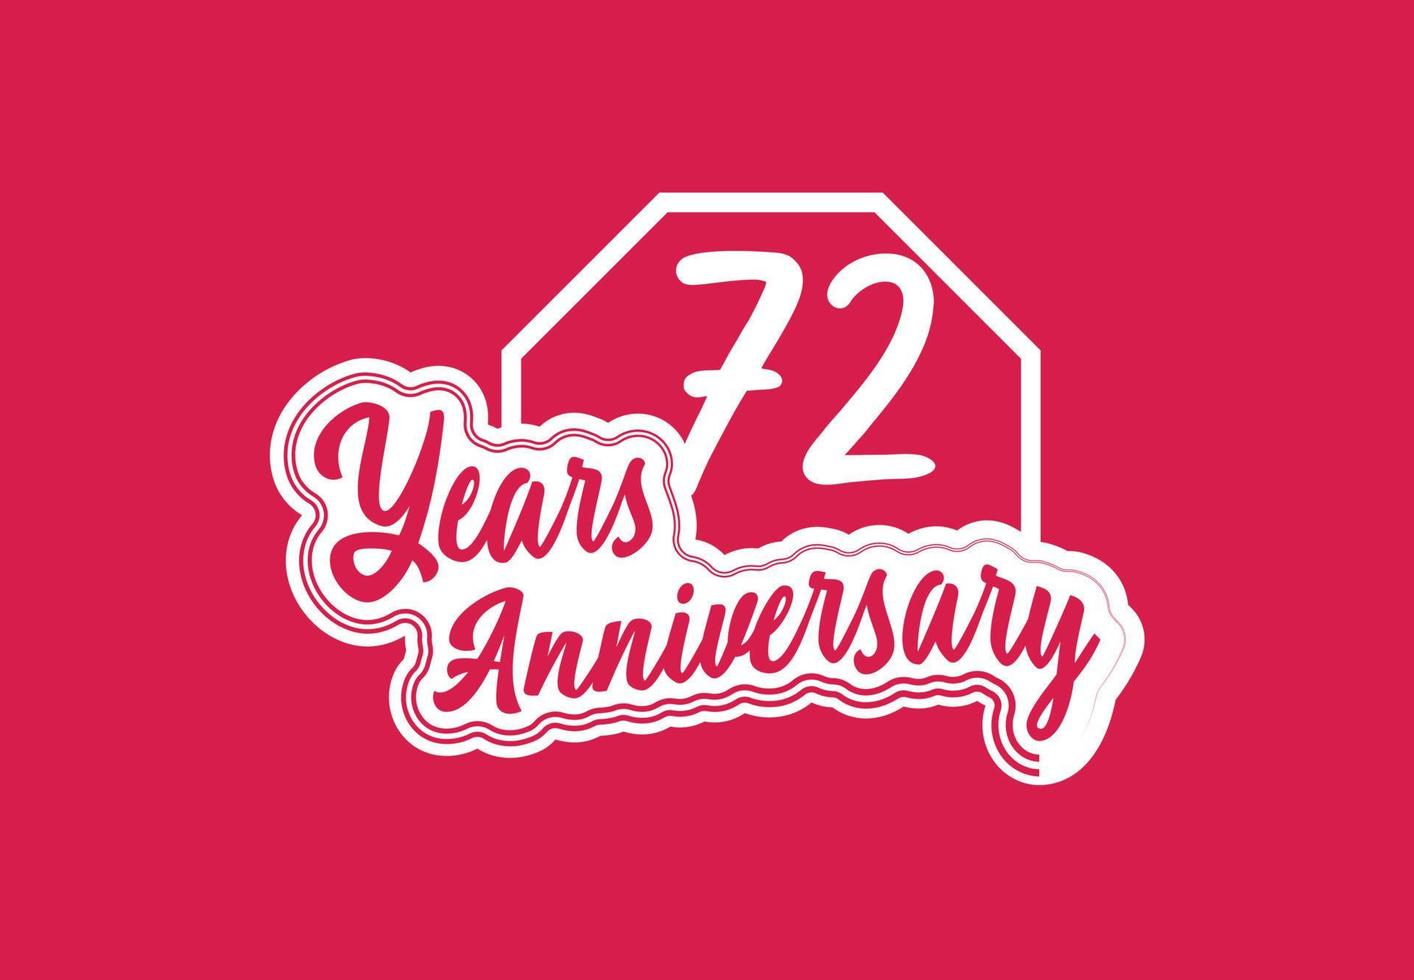 72 years anniversary logo and sticker design vector